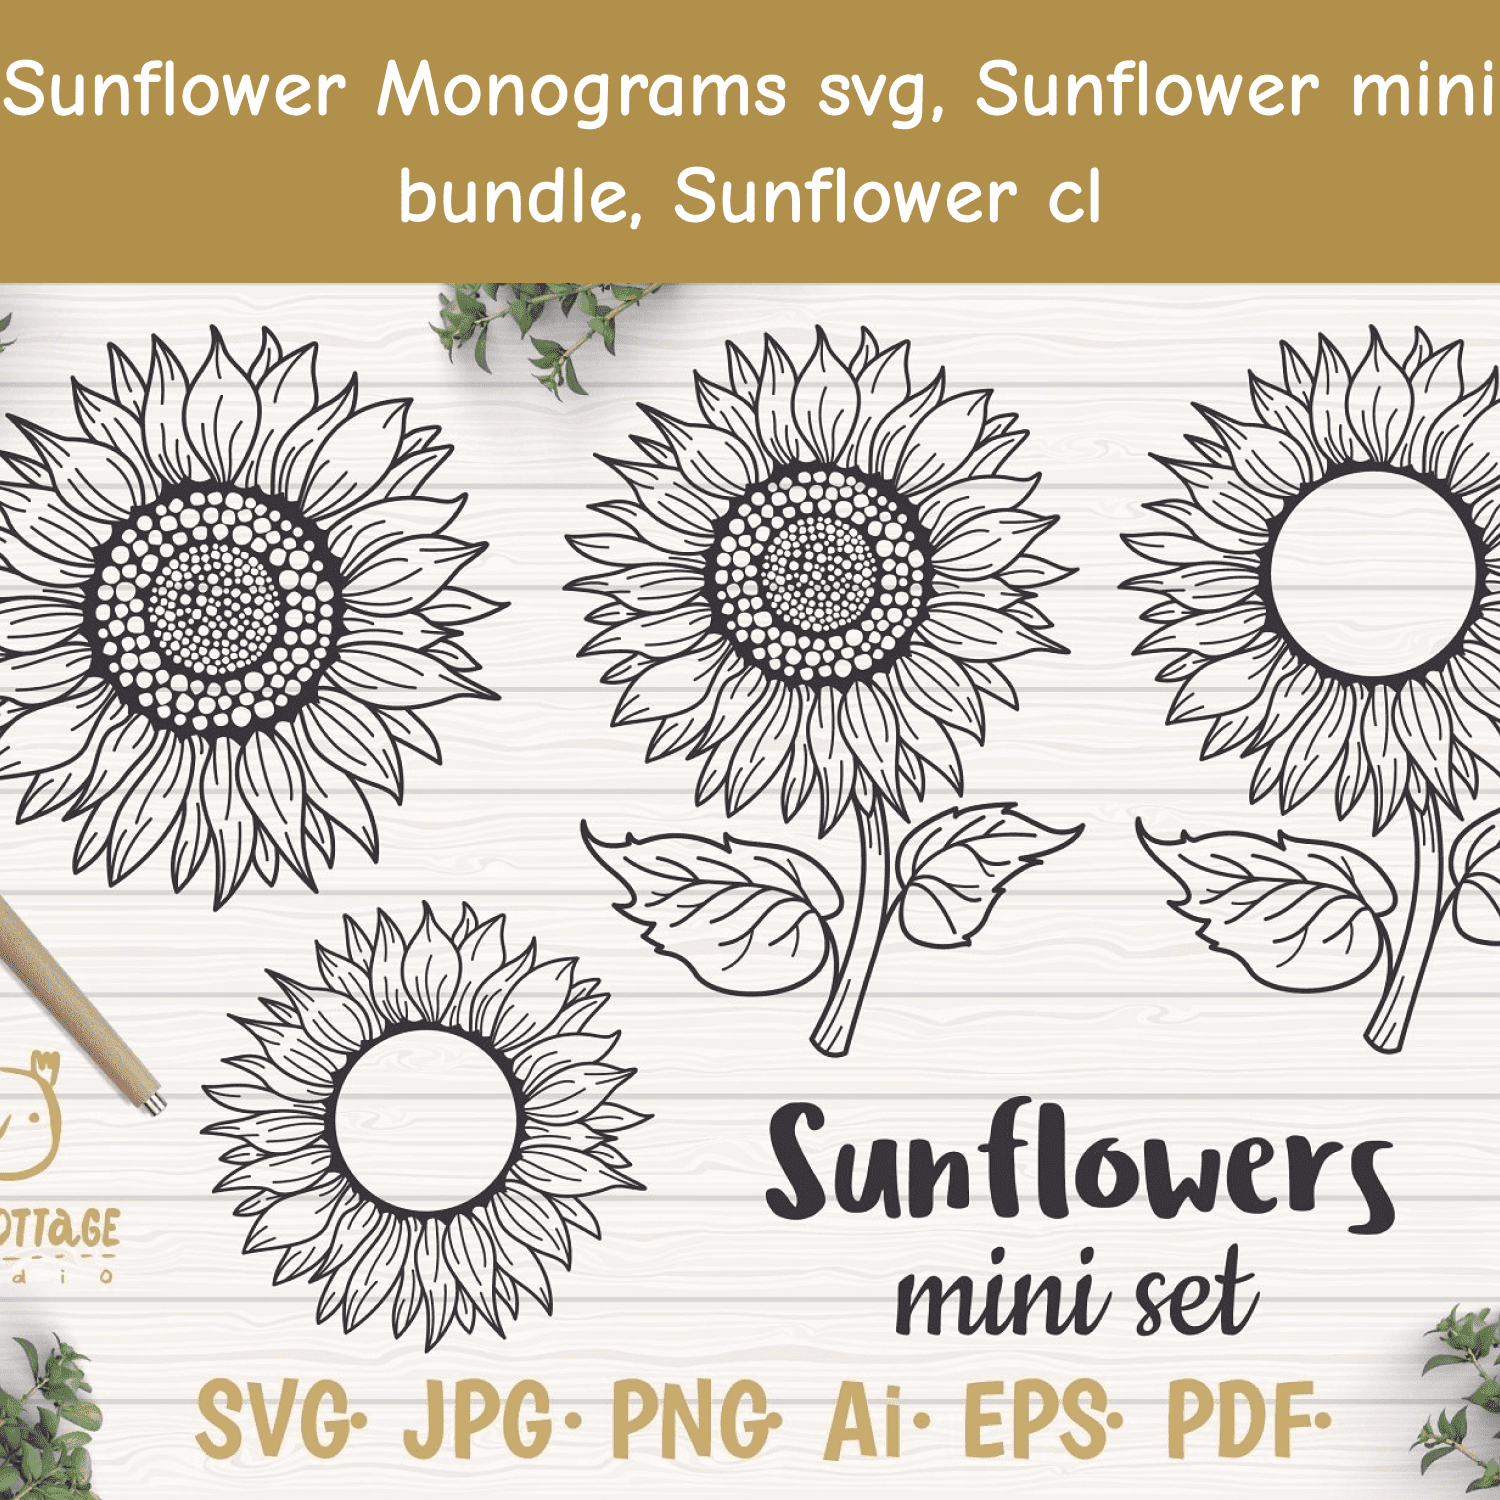 Sunflower Monograms svg, Sunflower mini bundle.